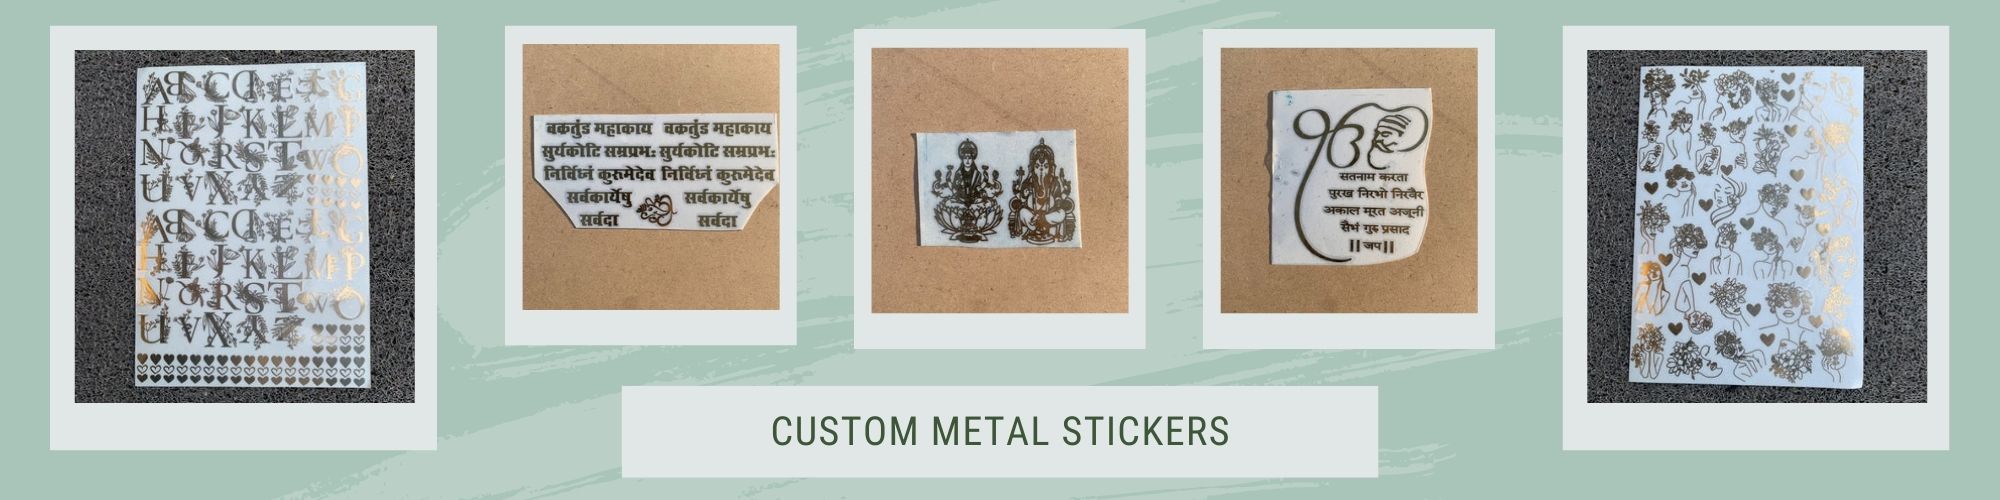 Custom Metal Stickers